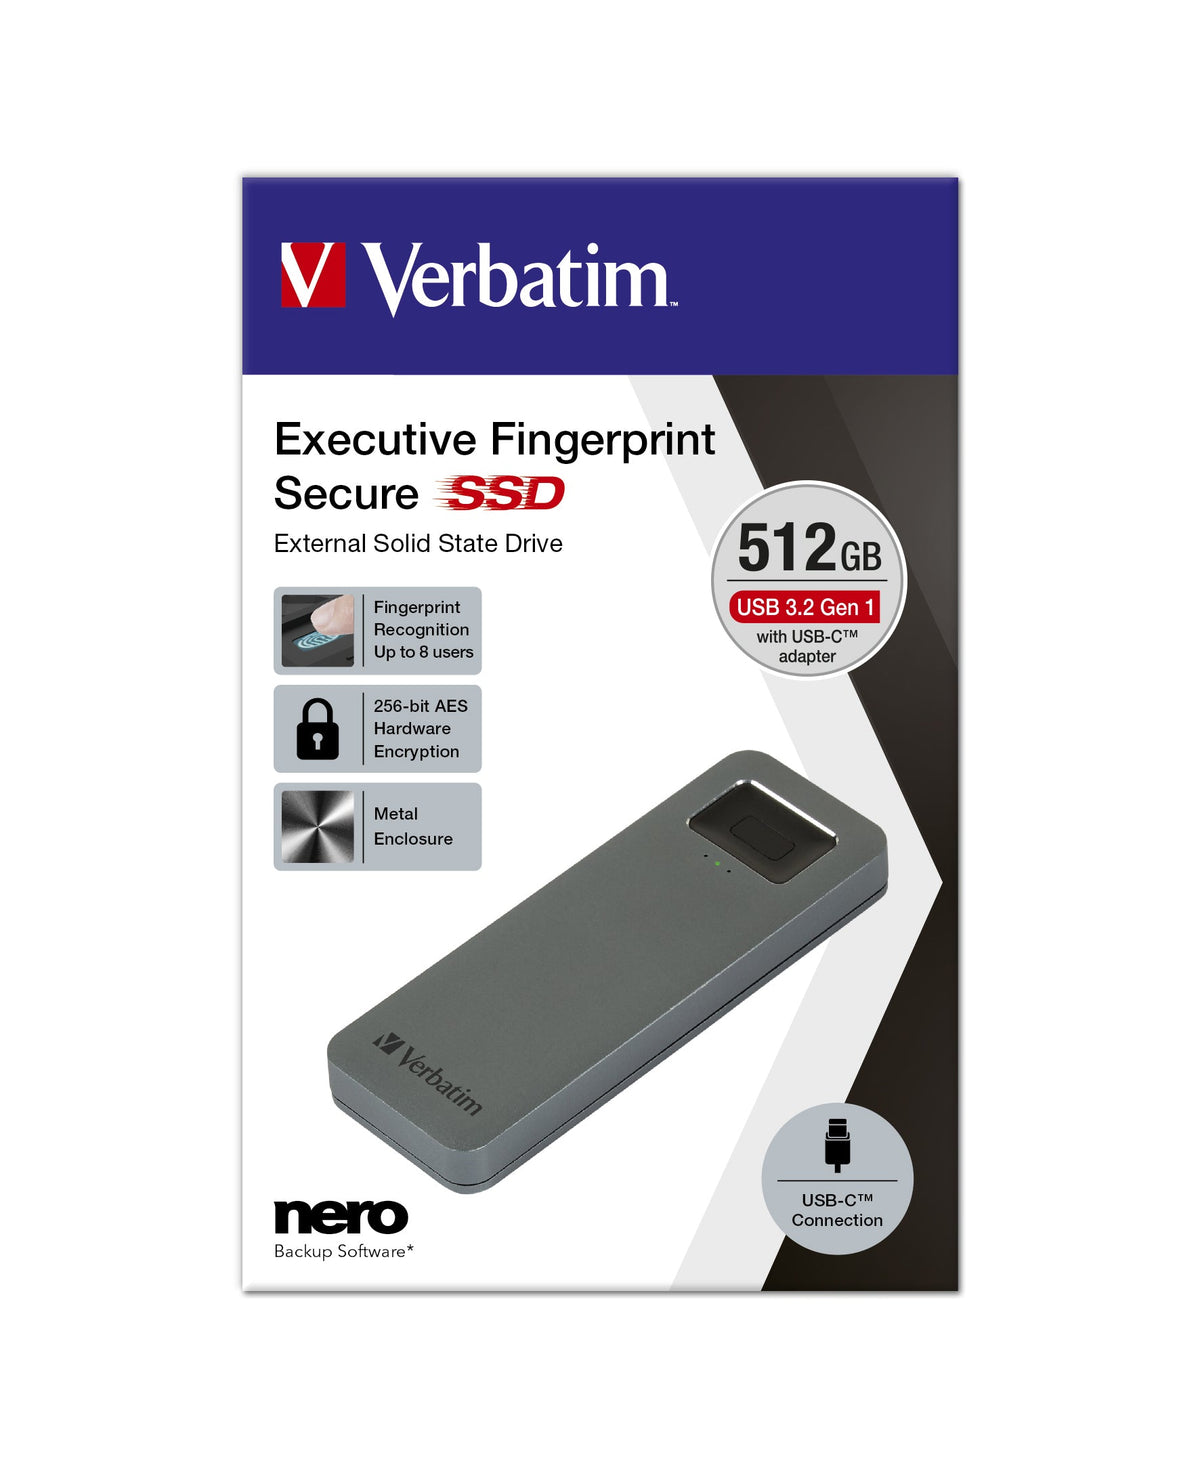 Verbatim External SSD Executive Fingerprint Secure